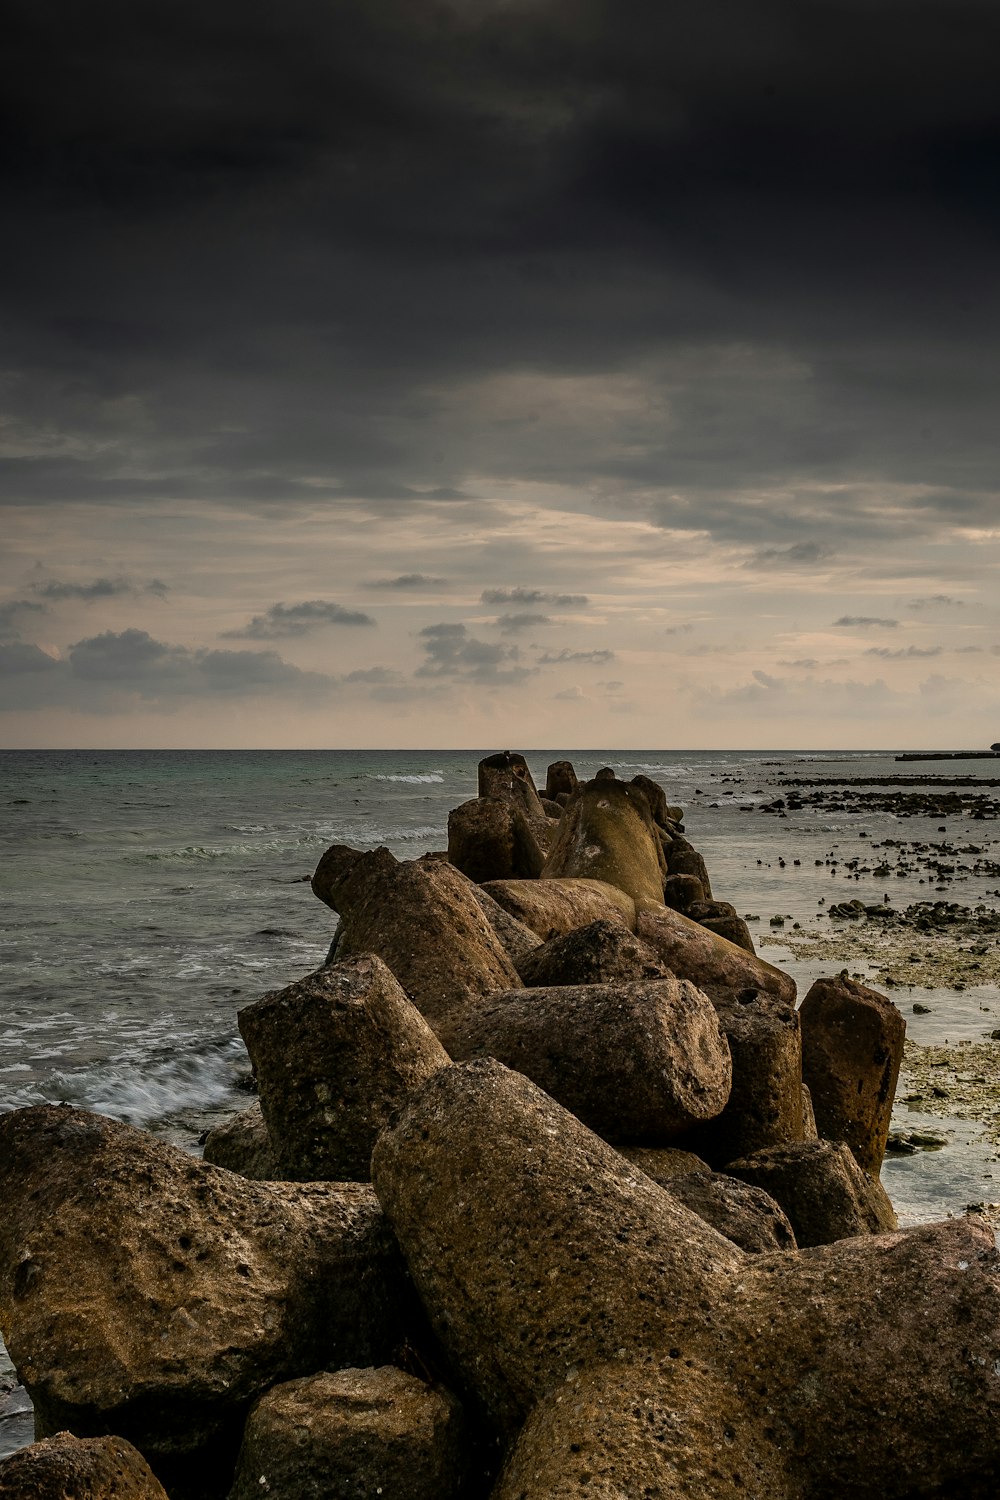 brown rocks on sea shore during daytime